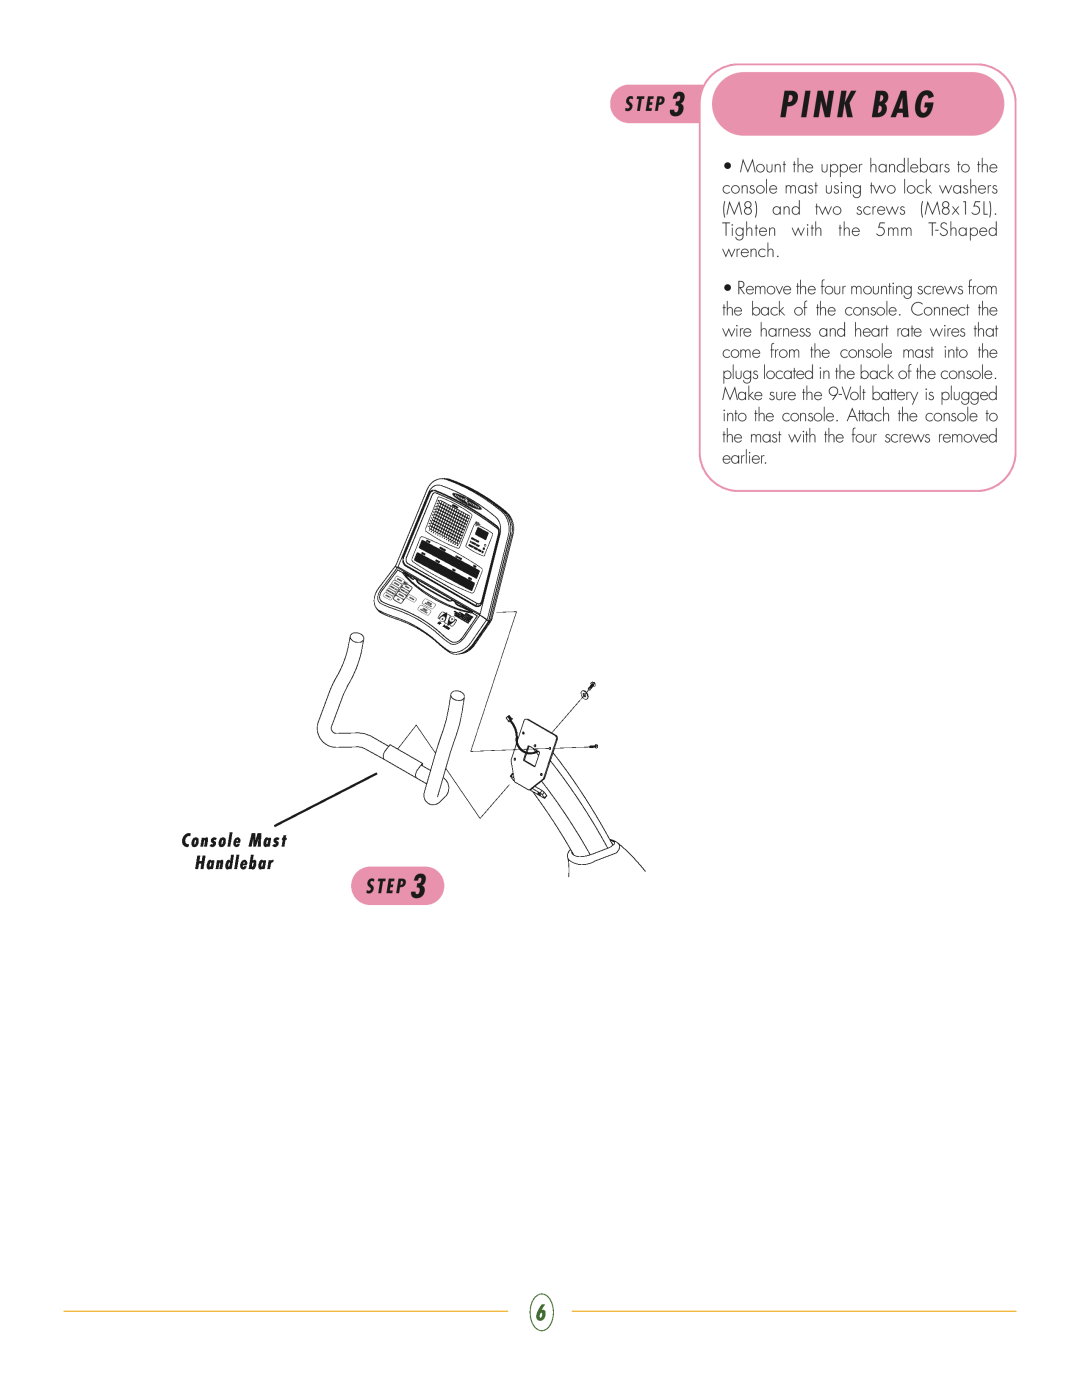 Vision Fitness R2650HRT manual Pink Bag, Console Mast Handlebar, S T E P 